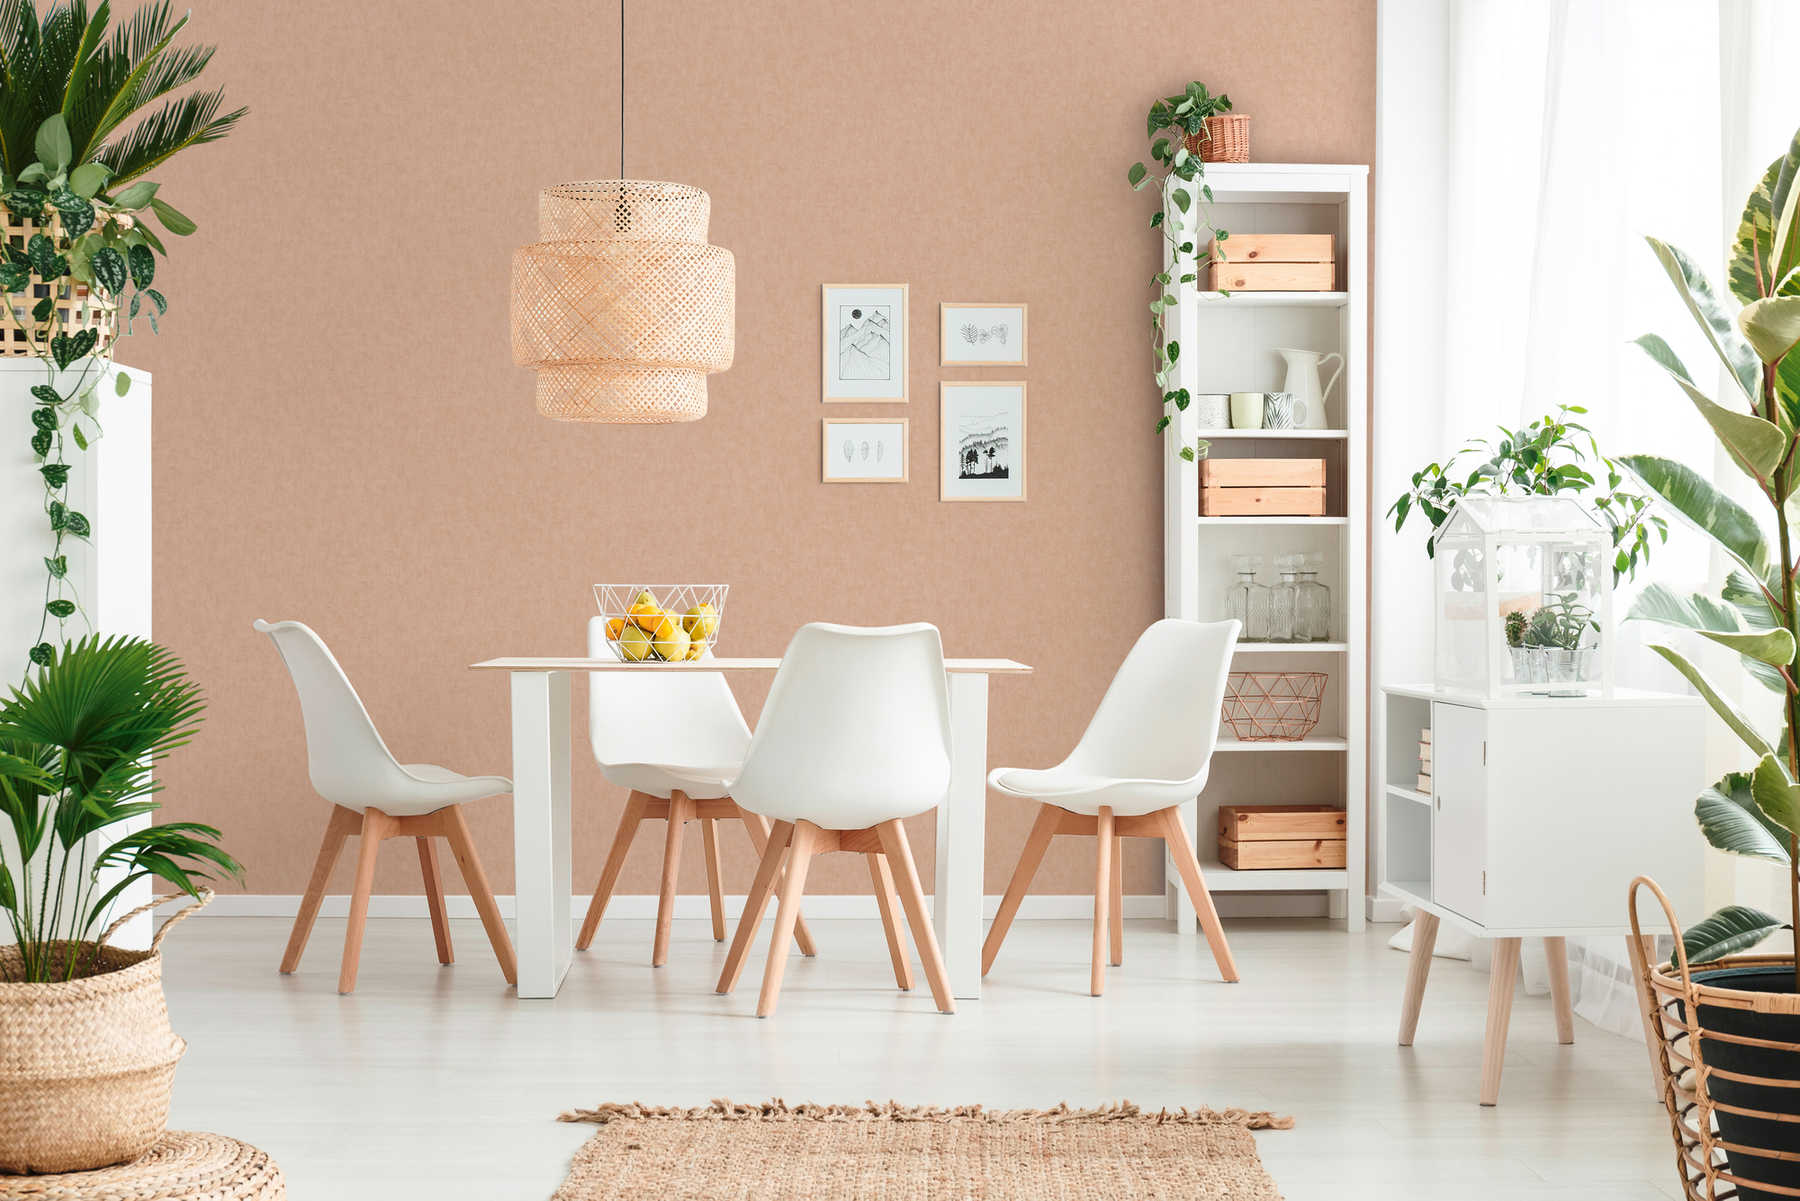             Wallpaper plain, linen look & Scandinavian style - pink, orange
        